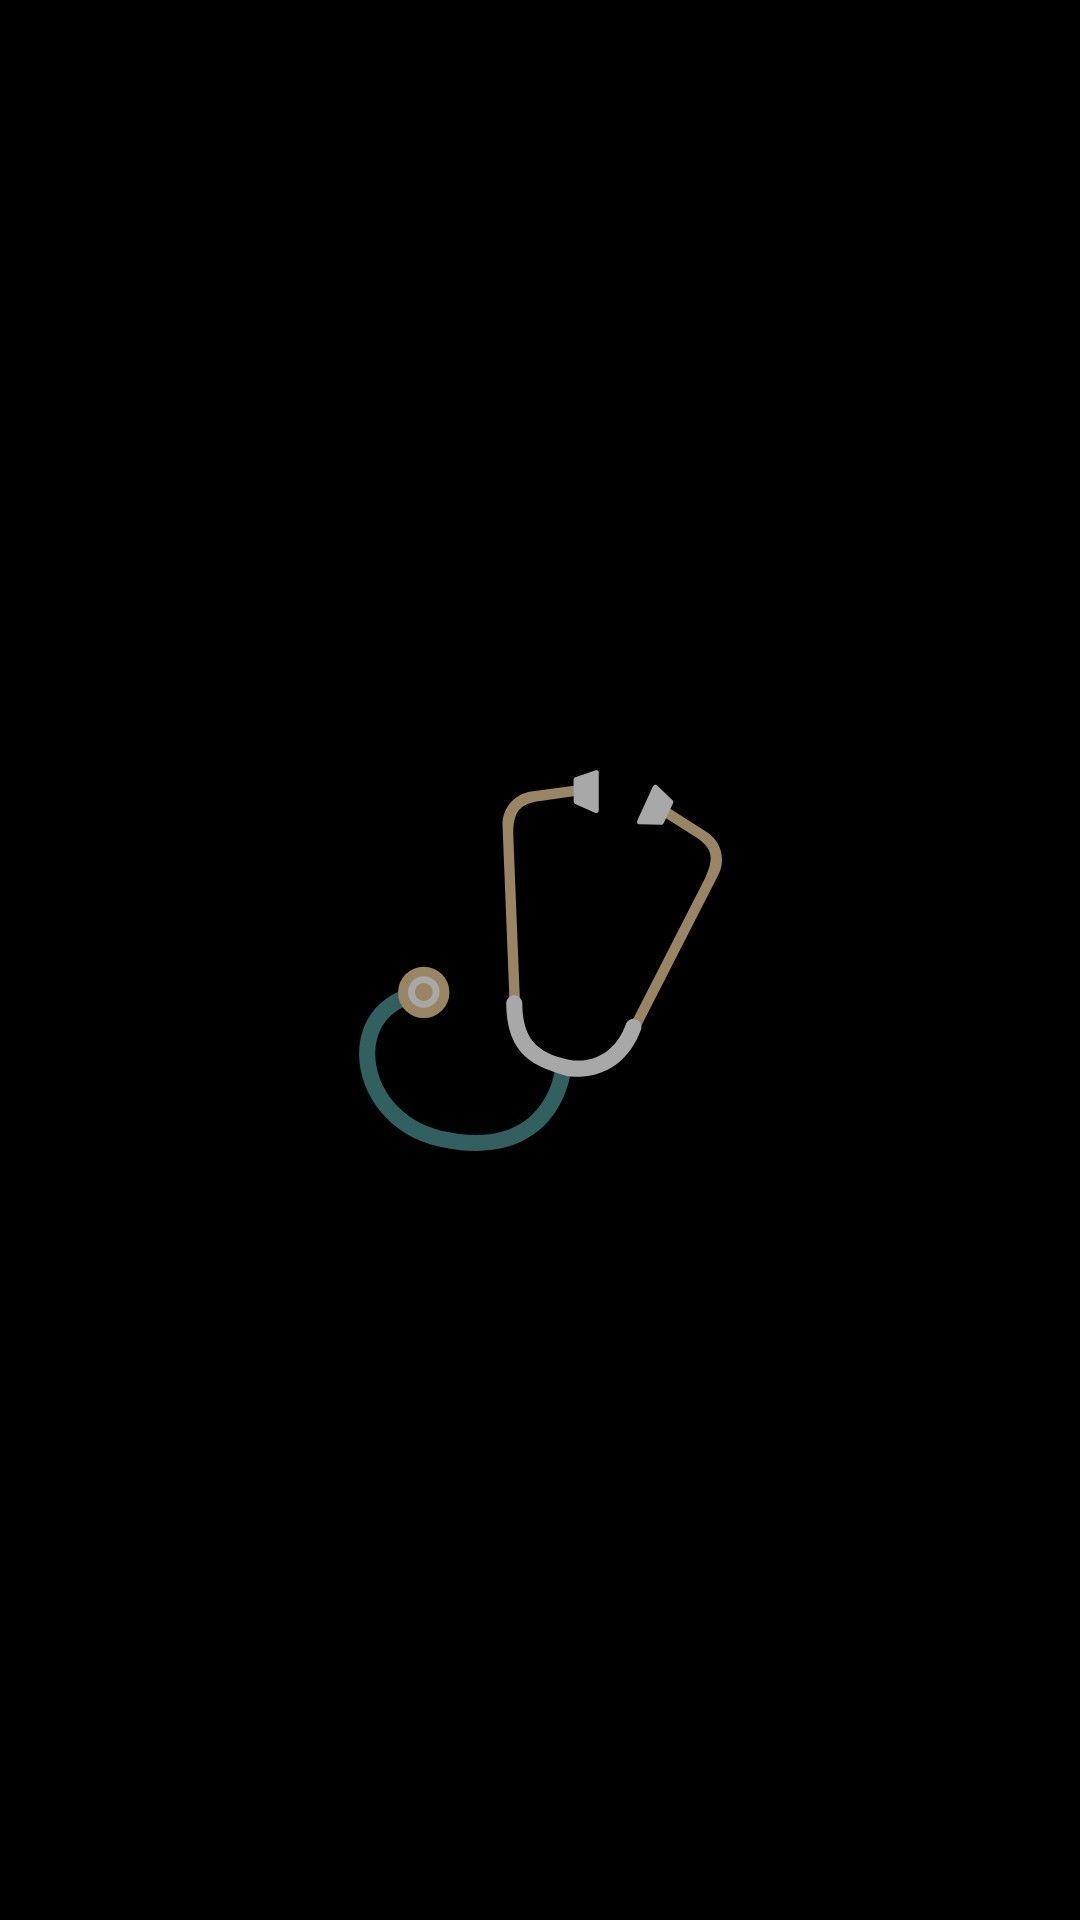 Medical wallpaper Stethoscope. Medical wallpaper, Nursing